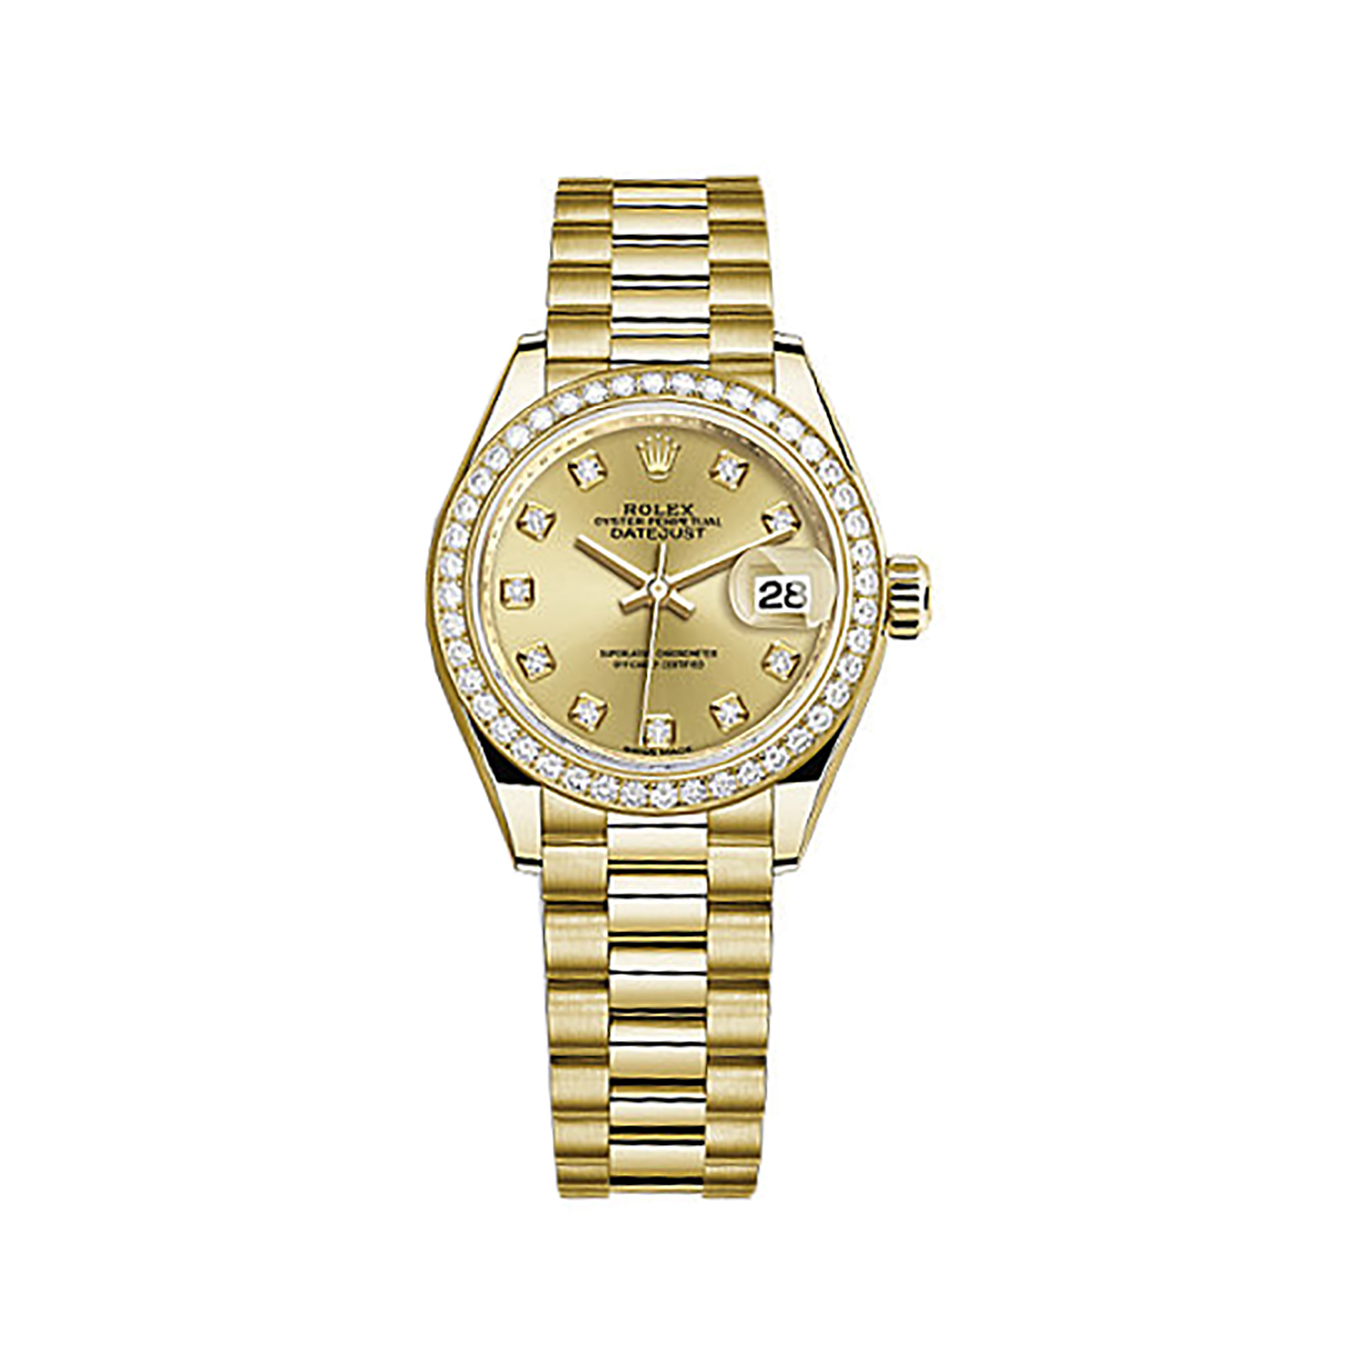 Lady-Datejust 28 279138RBR Gold & Diamonds Watch (Champagne Set with Diamonds)